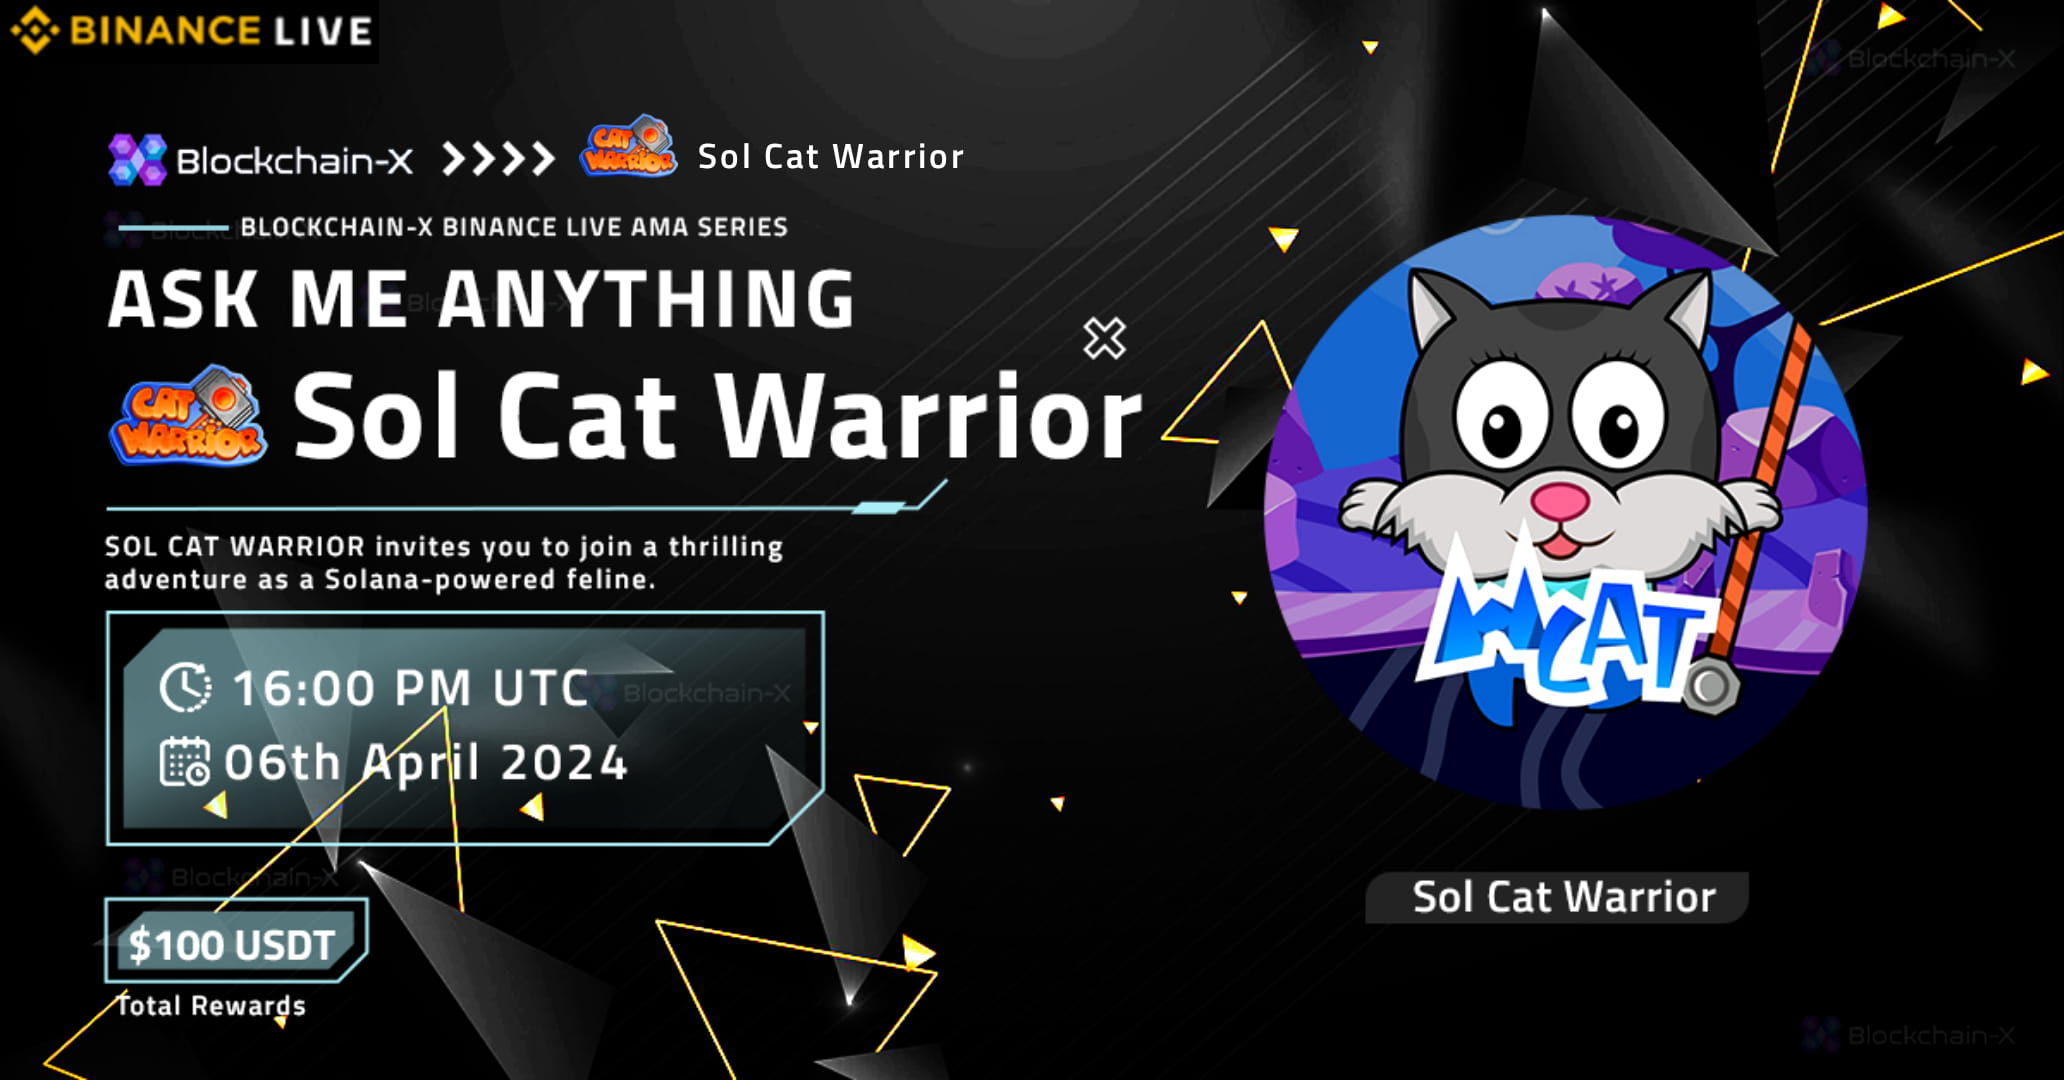 Blockchain-X AMA with Sol Cat Warrior [Reward $100 USDT]